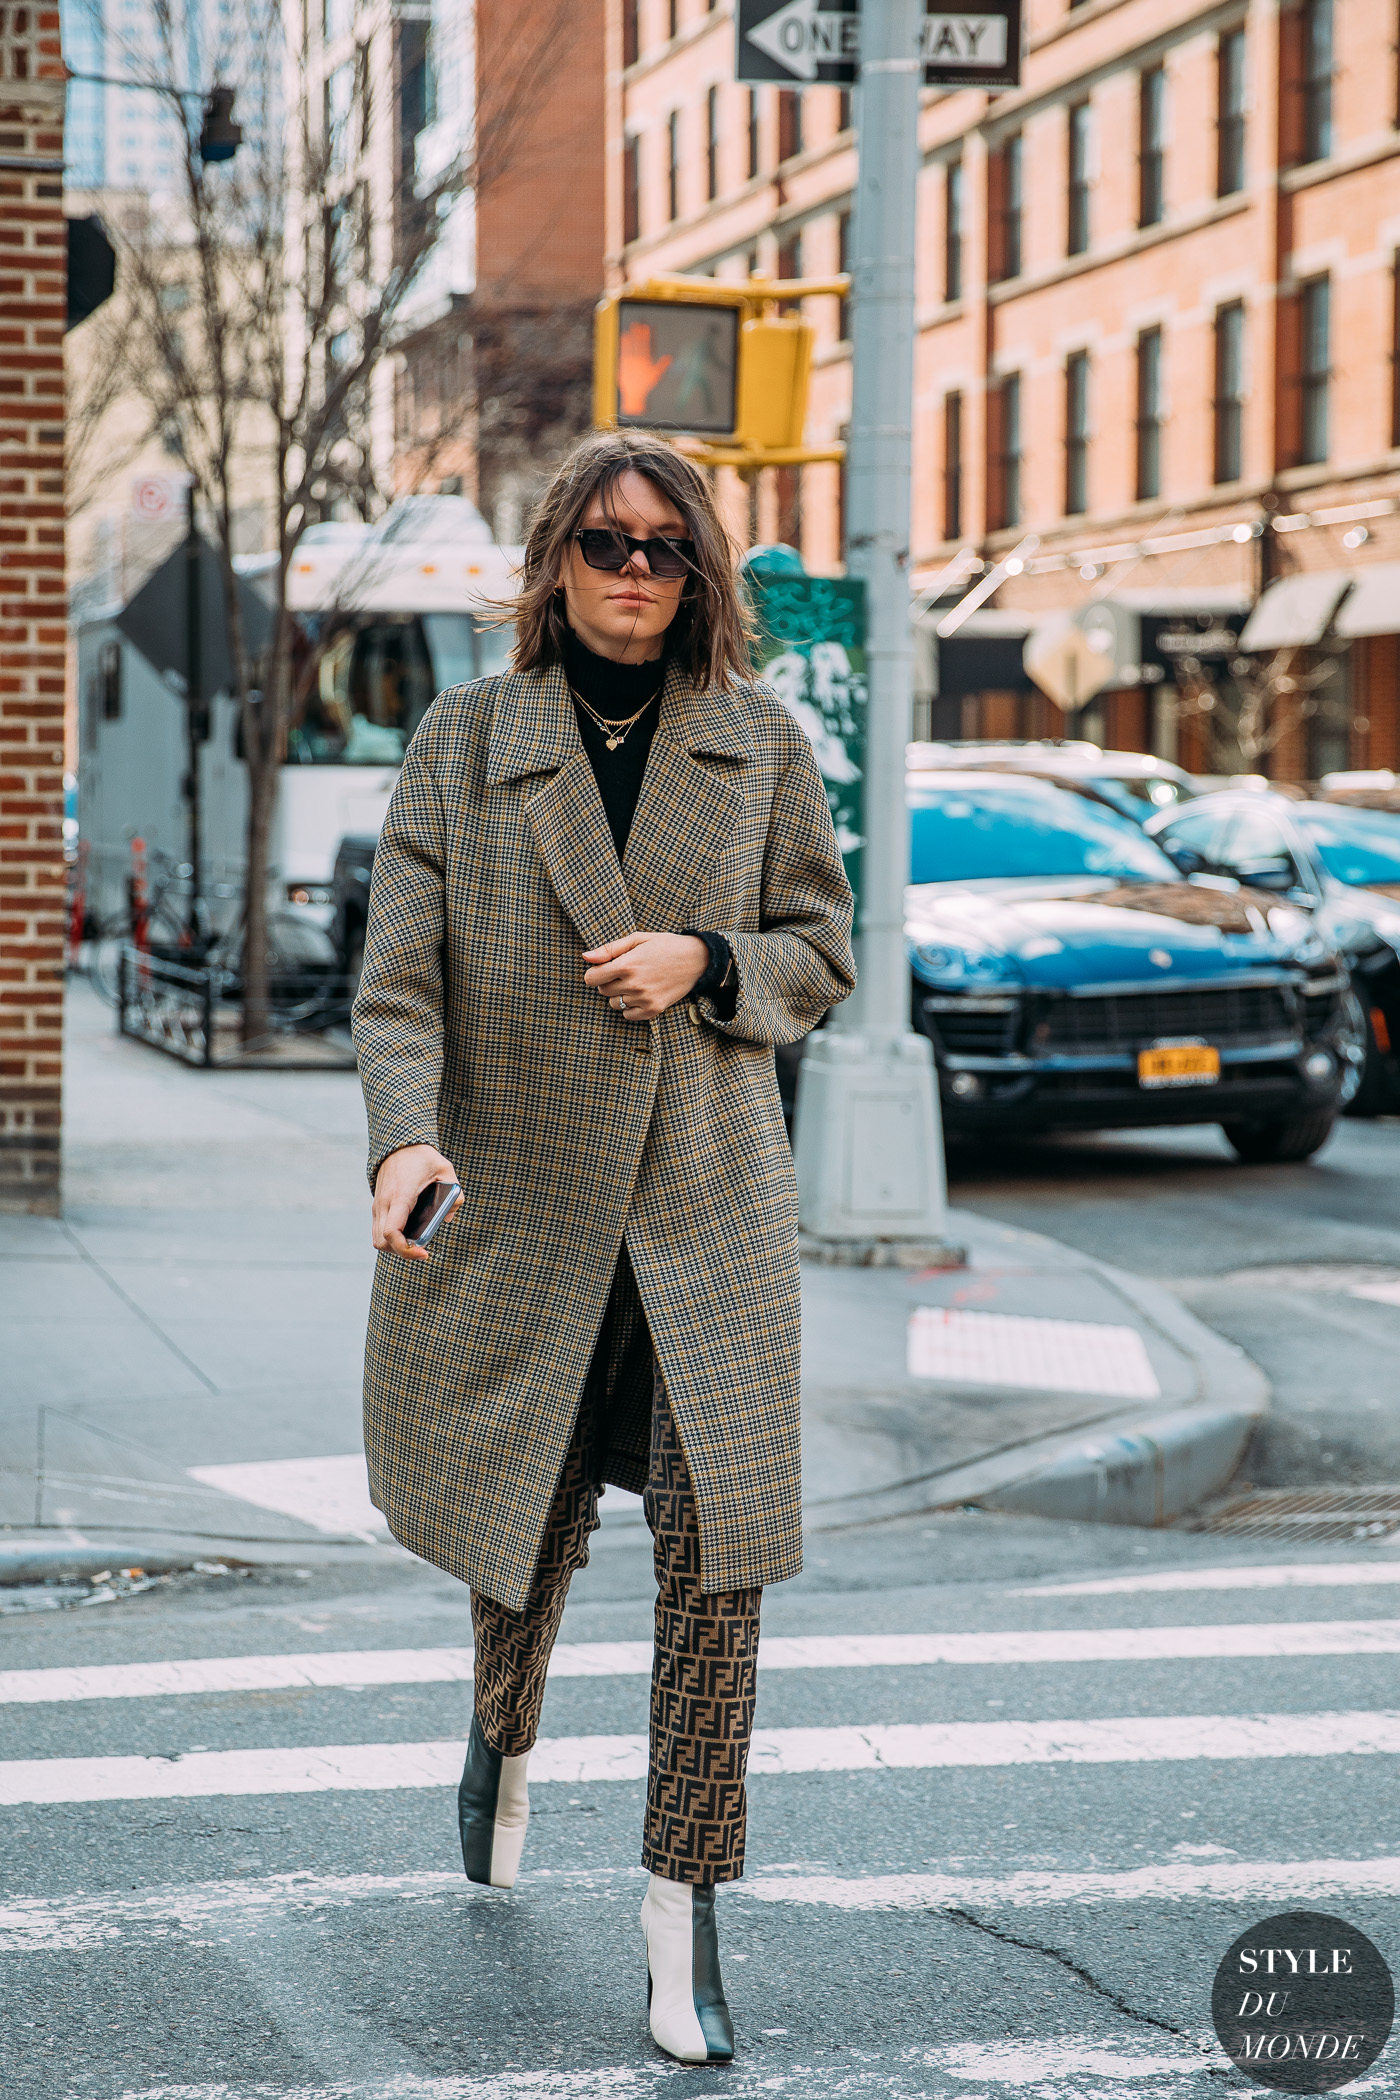 New York Fall 2020 Street Style: Julia Gall | LaptrinhX / News